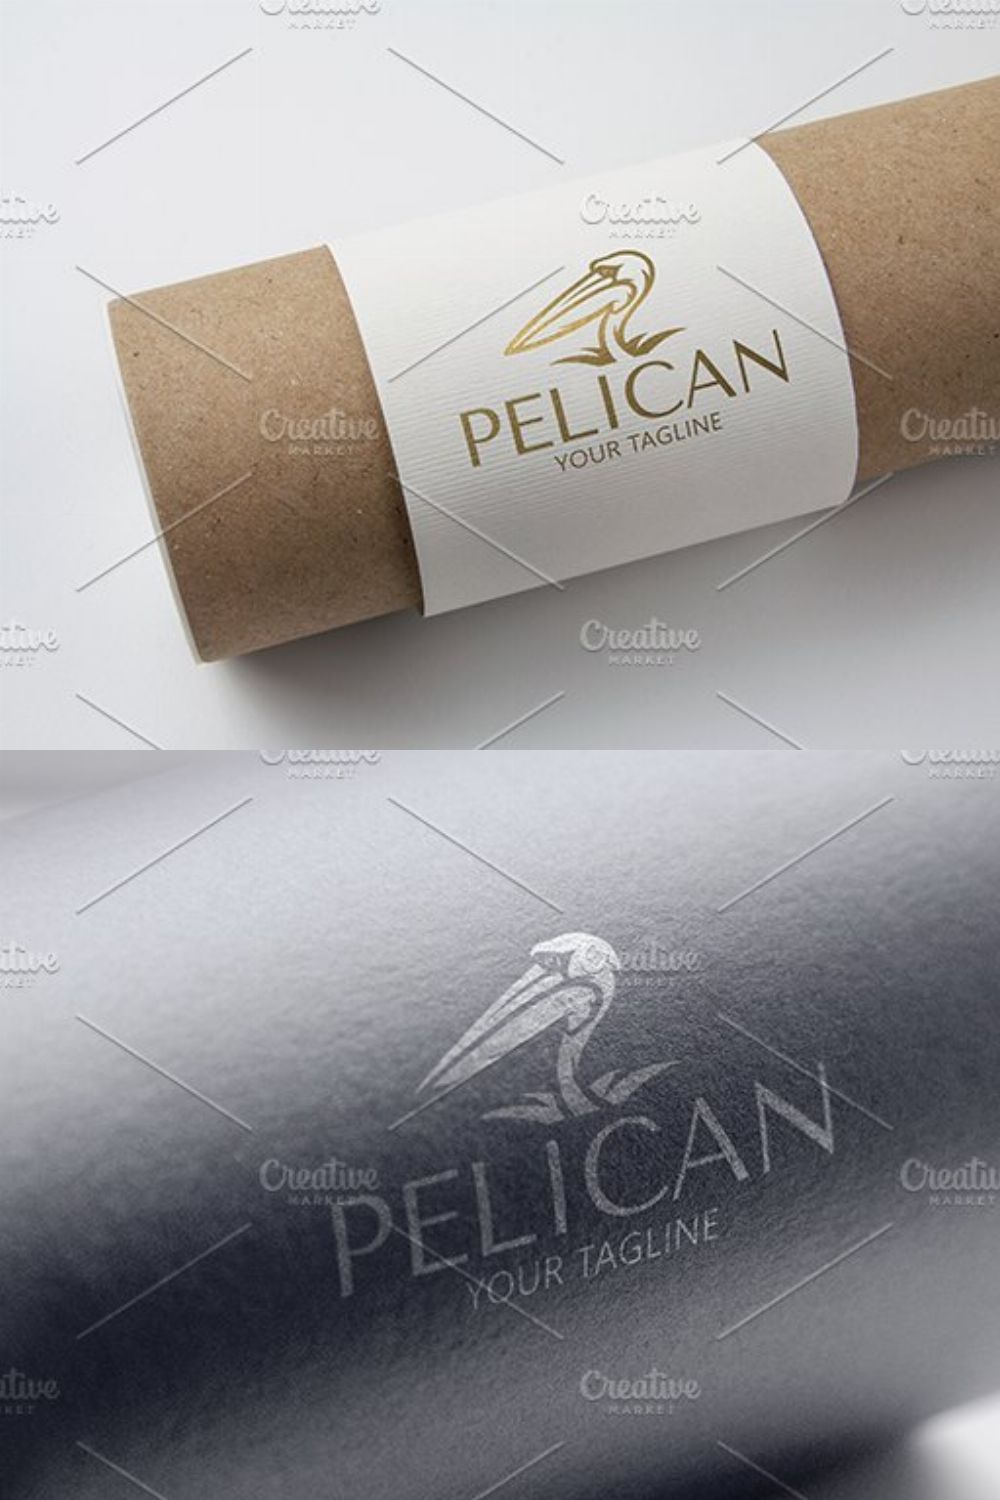 Pelican Logo pinterest preview image.